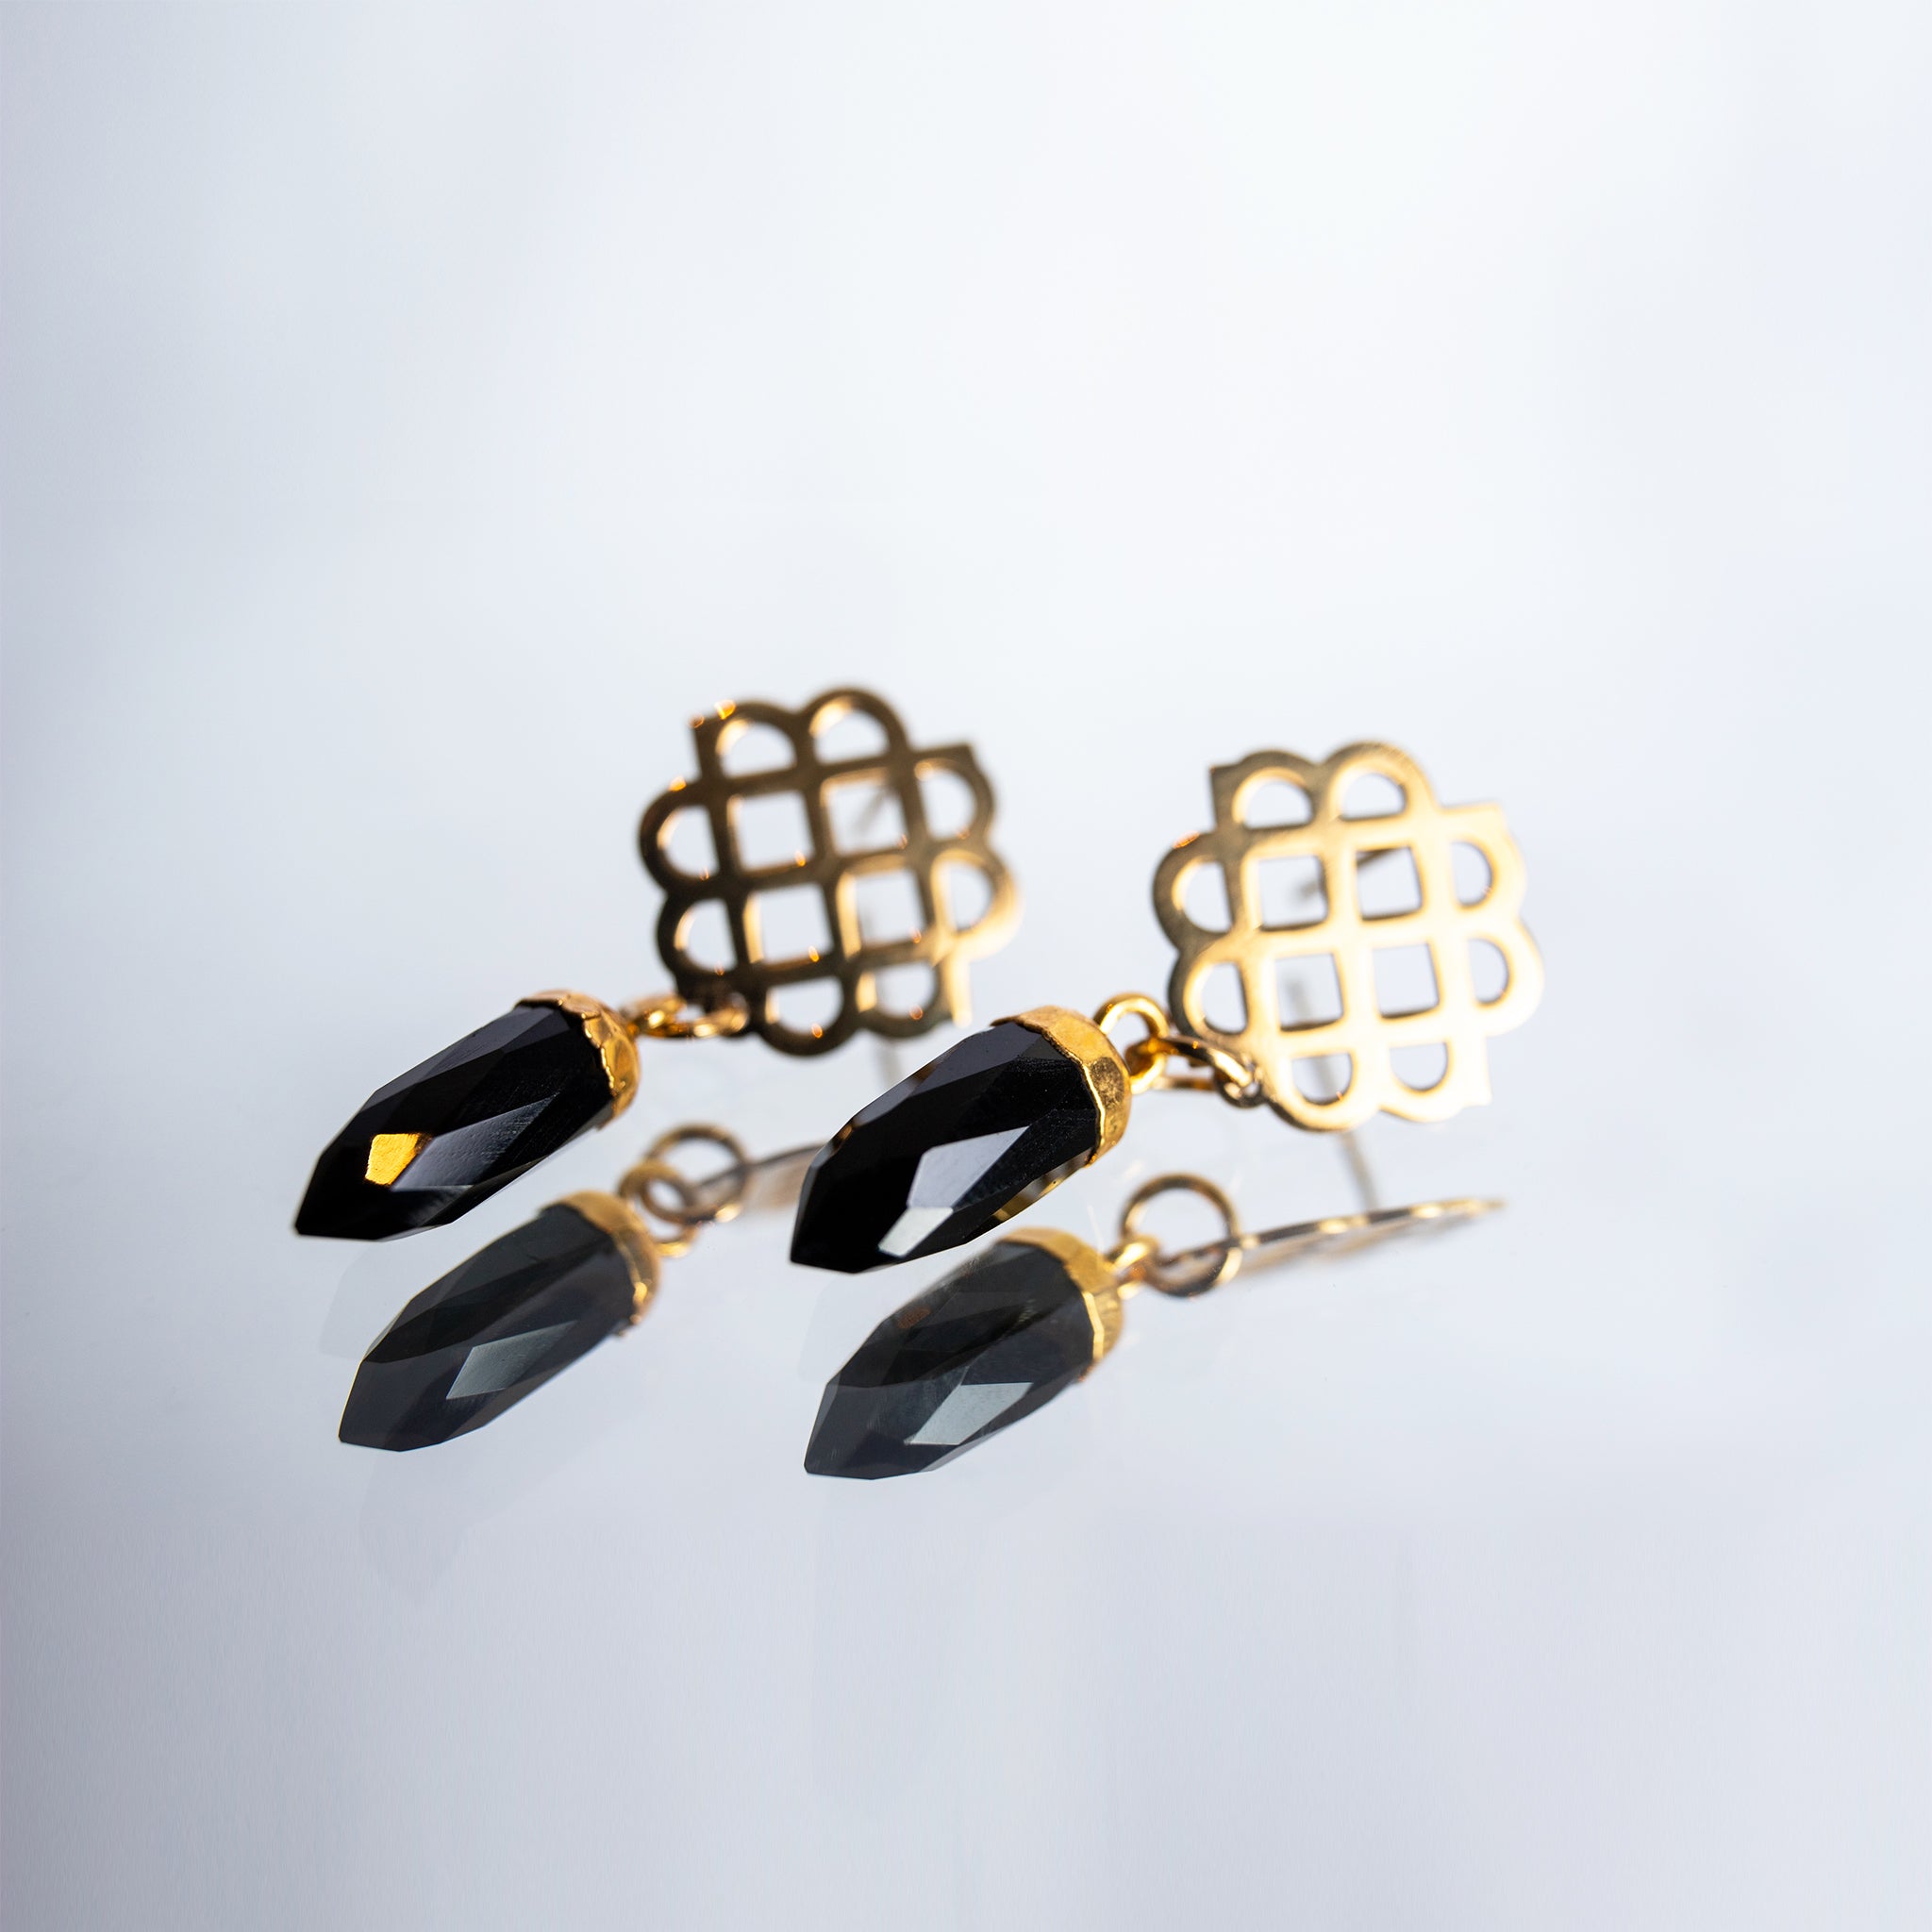 Millié Jewelry - Millié Jewelry - Millié Stone Earrings - Aretes - Diseño Mexicano - Hecho en México